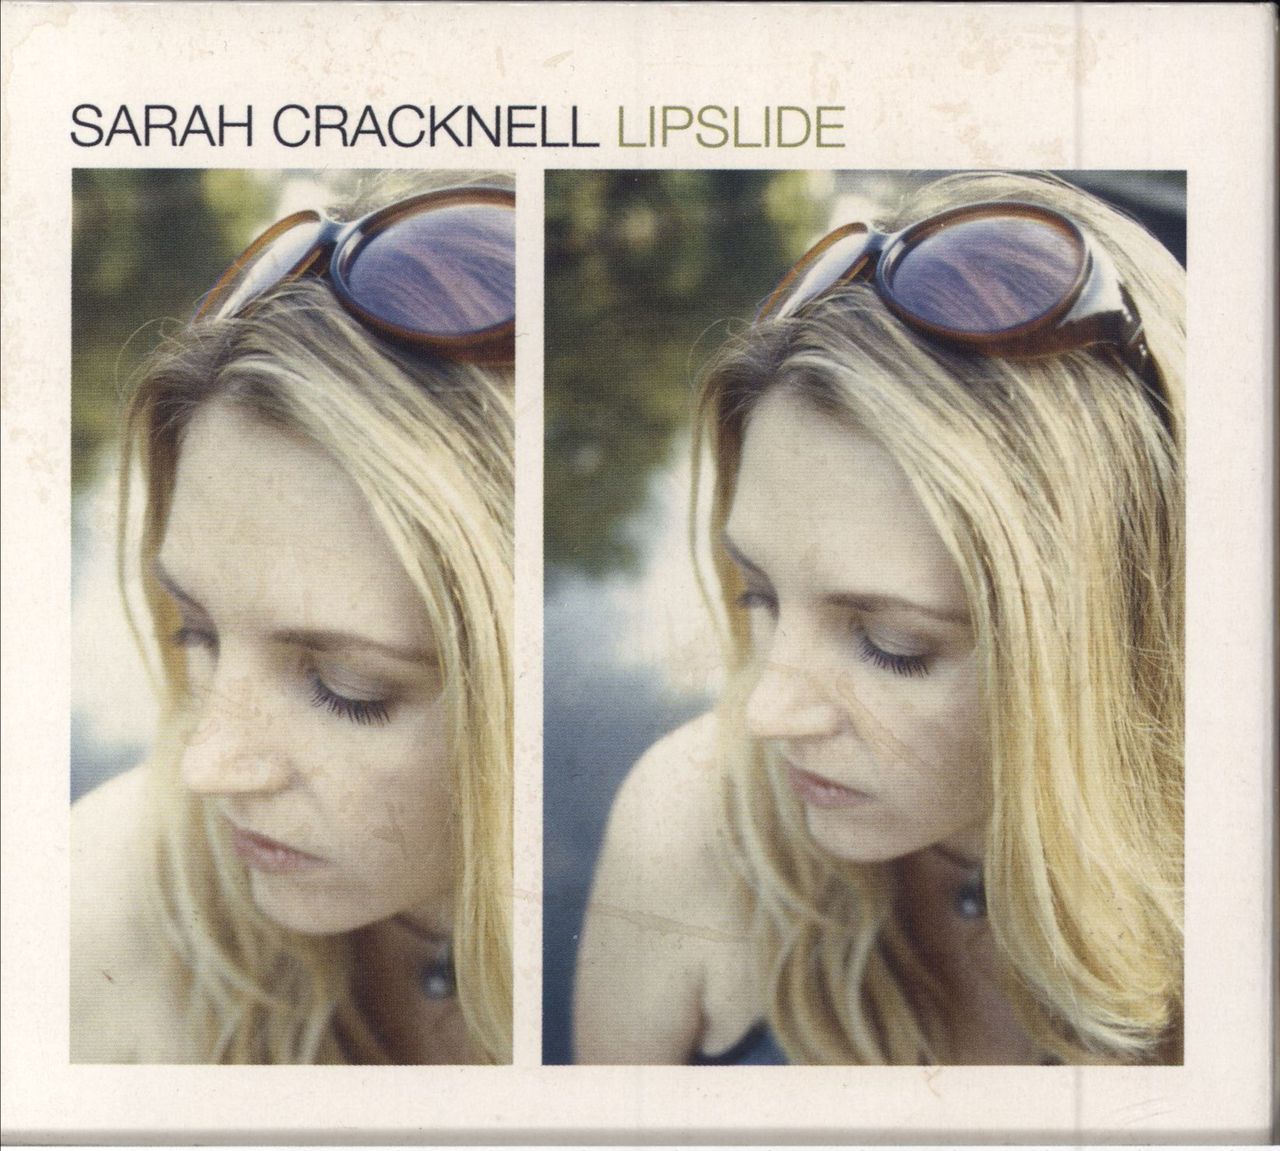 Sarah Cracknell Lipslide - EX UK 2 CD album set (Double CD) HVNLP92CDDE